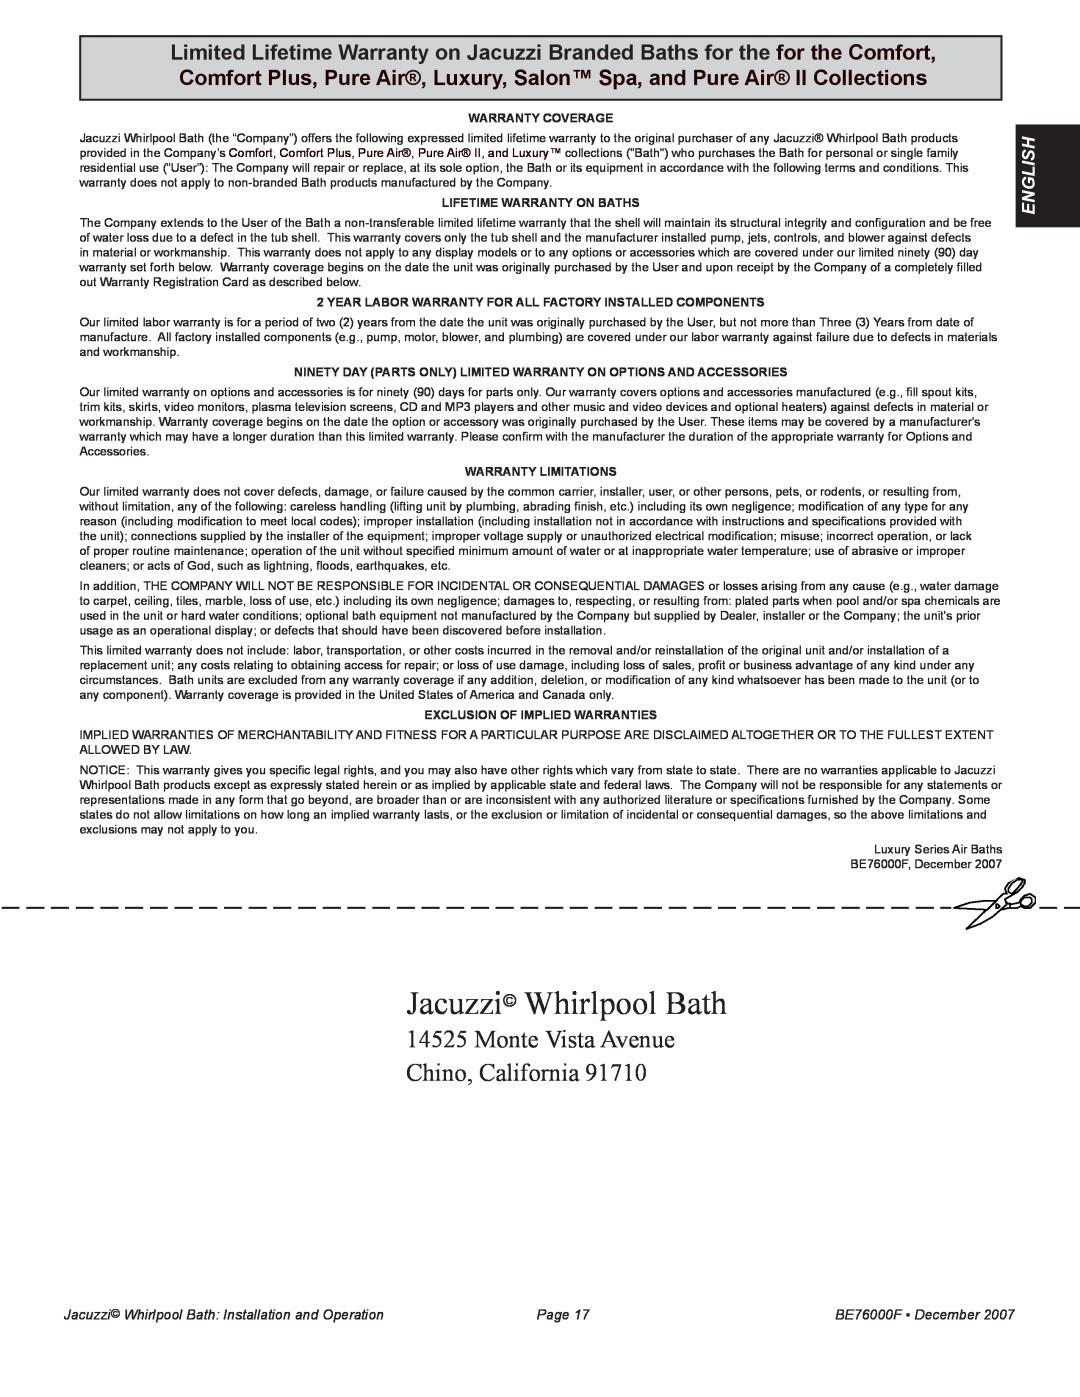 Jacuzzi LUXURY SERIES manual Jacuzzi Whirlpool Bath, Monte Vista Avenue Chino, California, English, Page, BE76000F December 